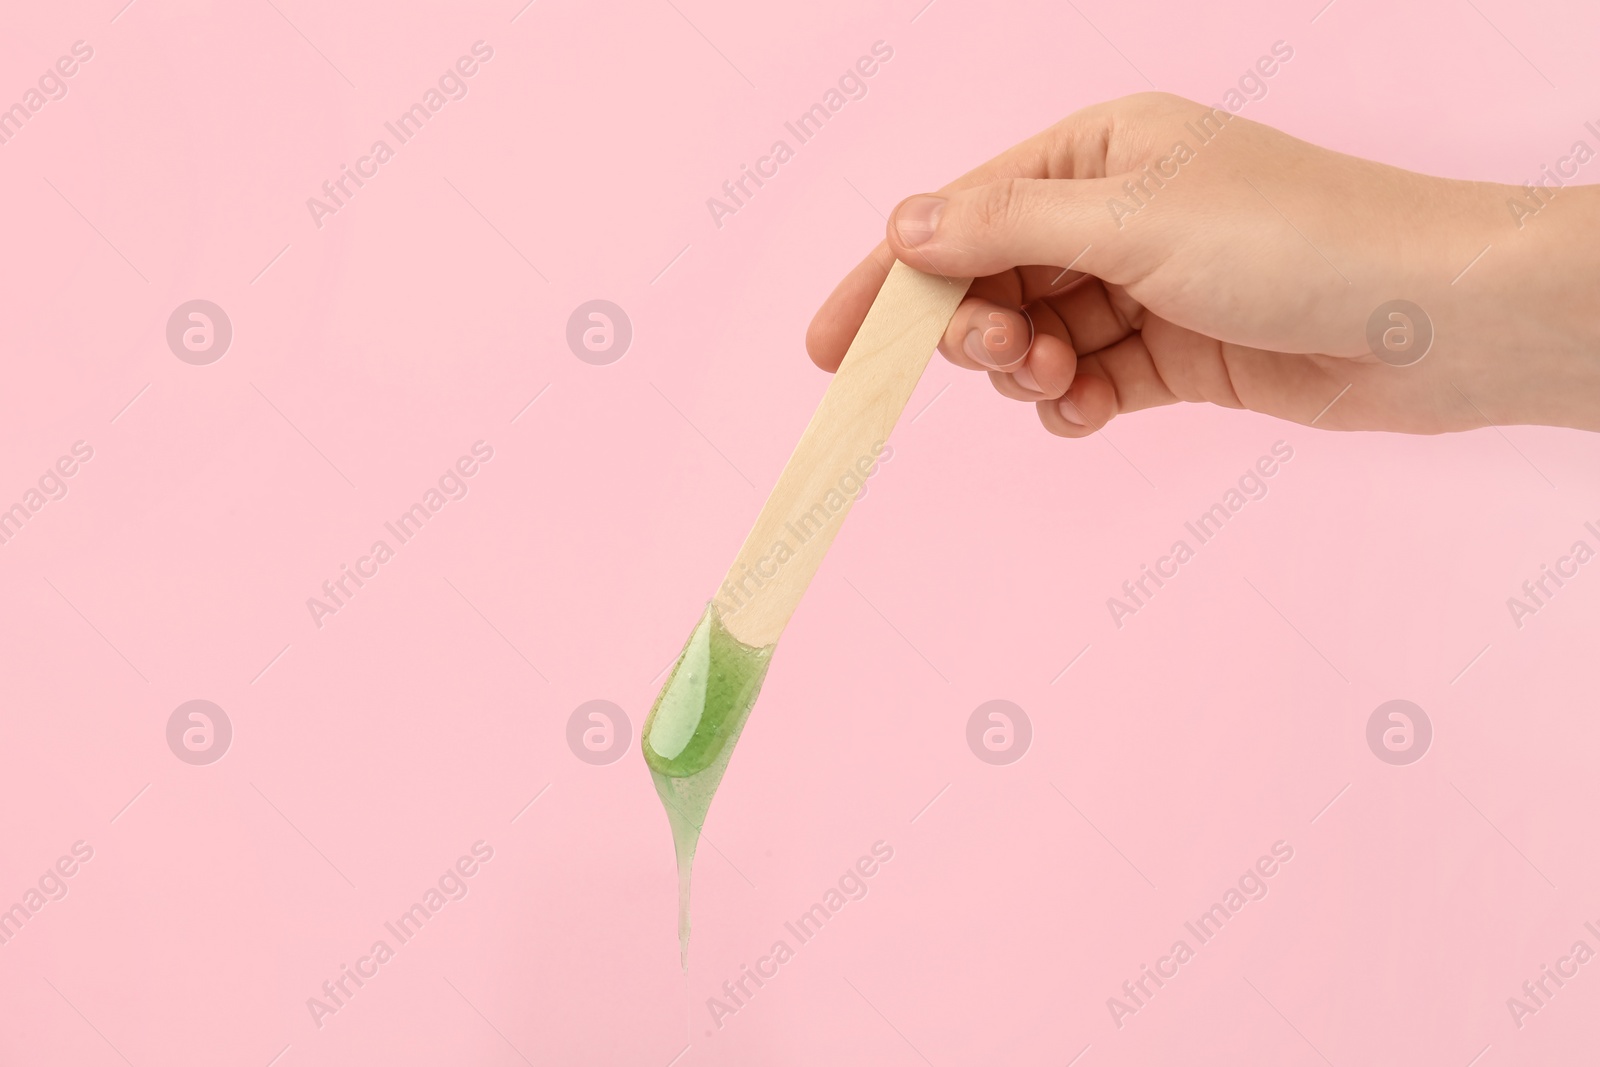 Photo of Woman holding spatula with hot depilatory wax on pink background, closeup